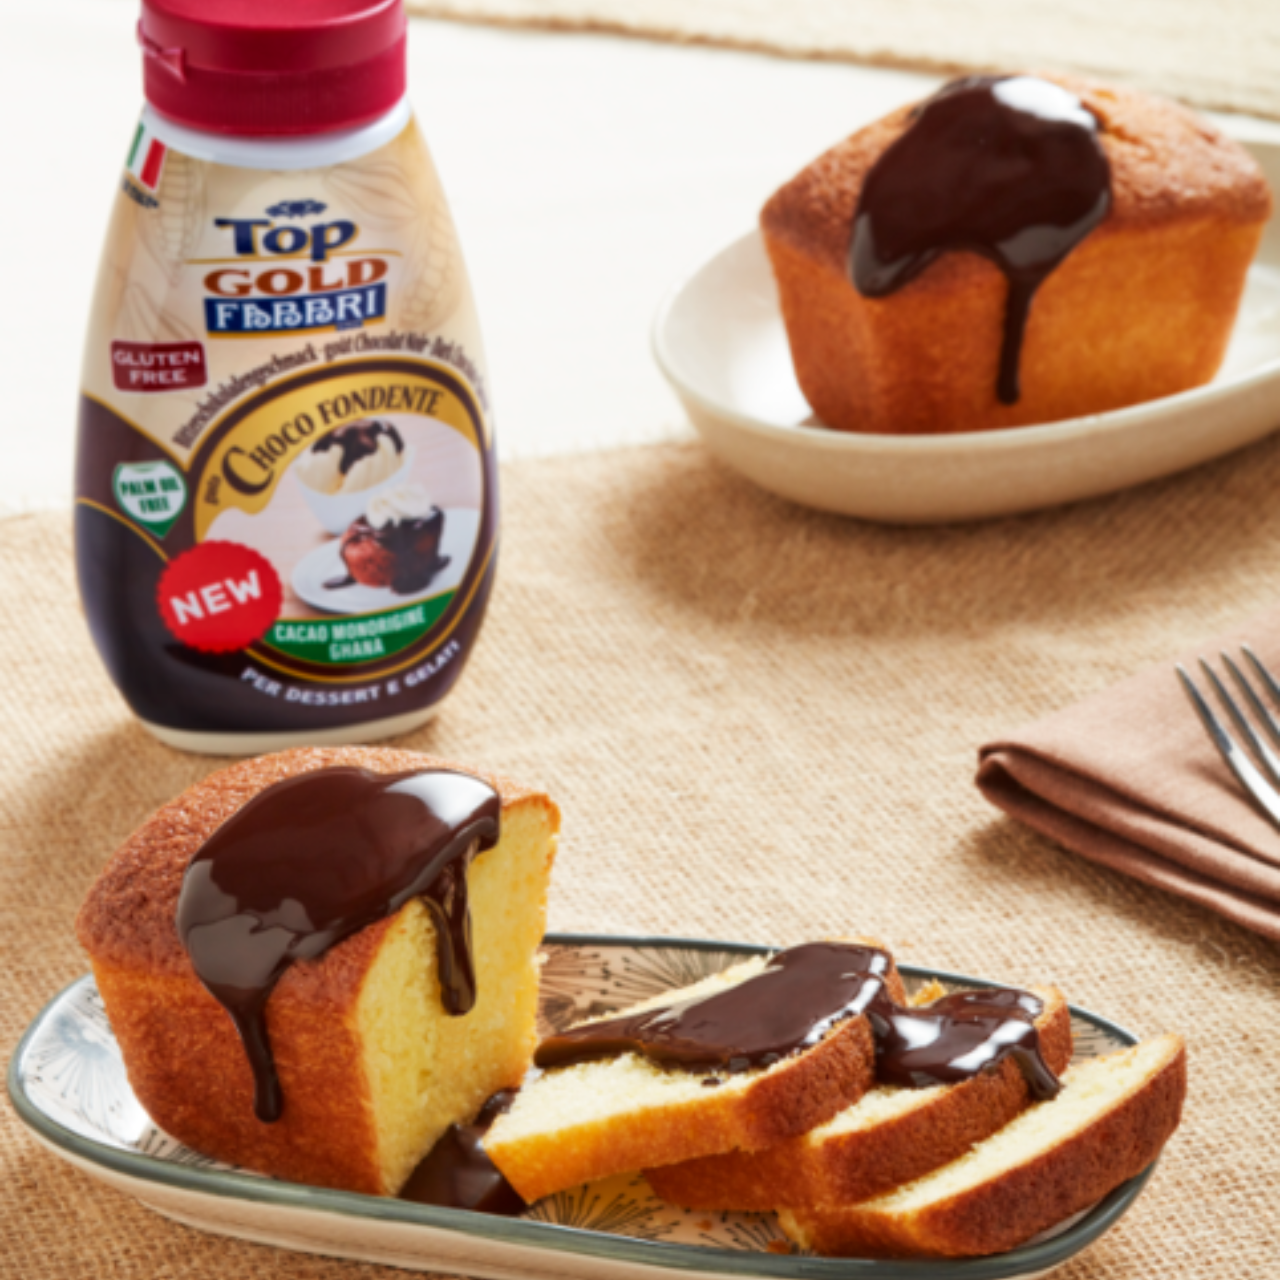 Mini plumcake con Top Choco Fondente Fabbri